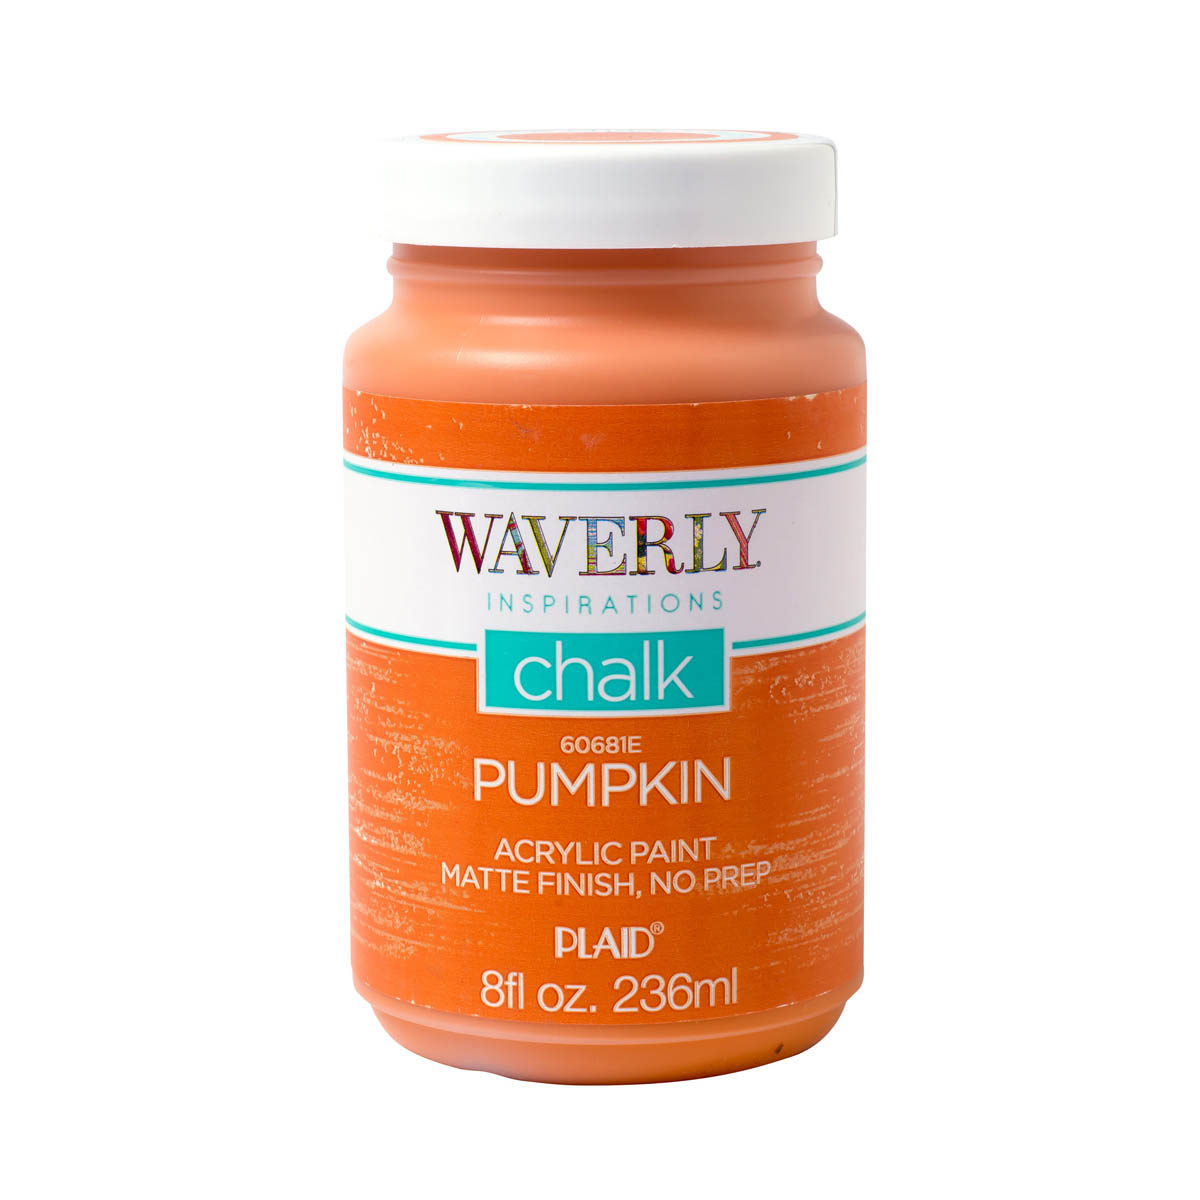 Waverly ® Inspirations Chalk Acrylic Paint - Pumpkin, 8 oz. - 60681E